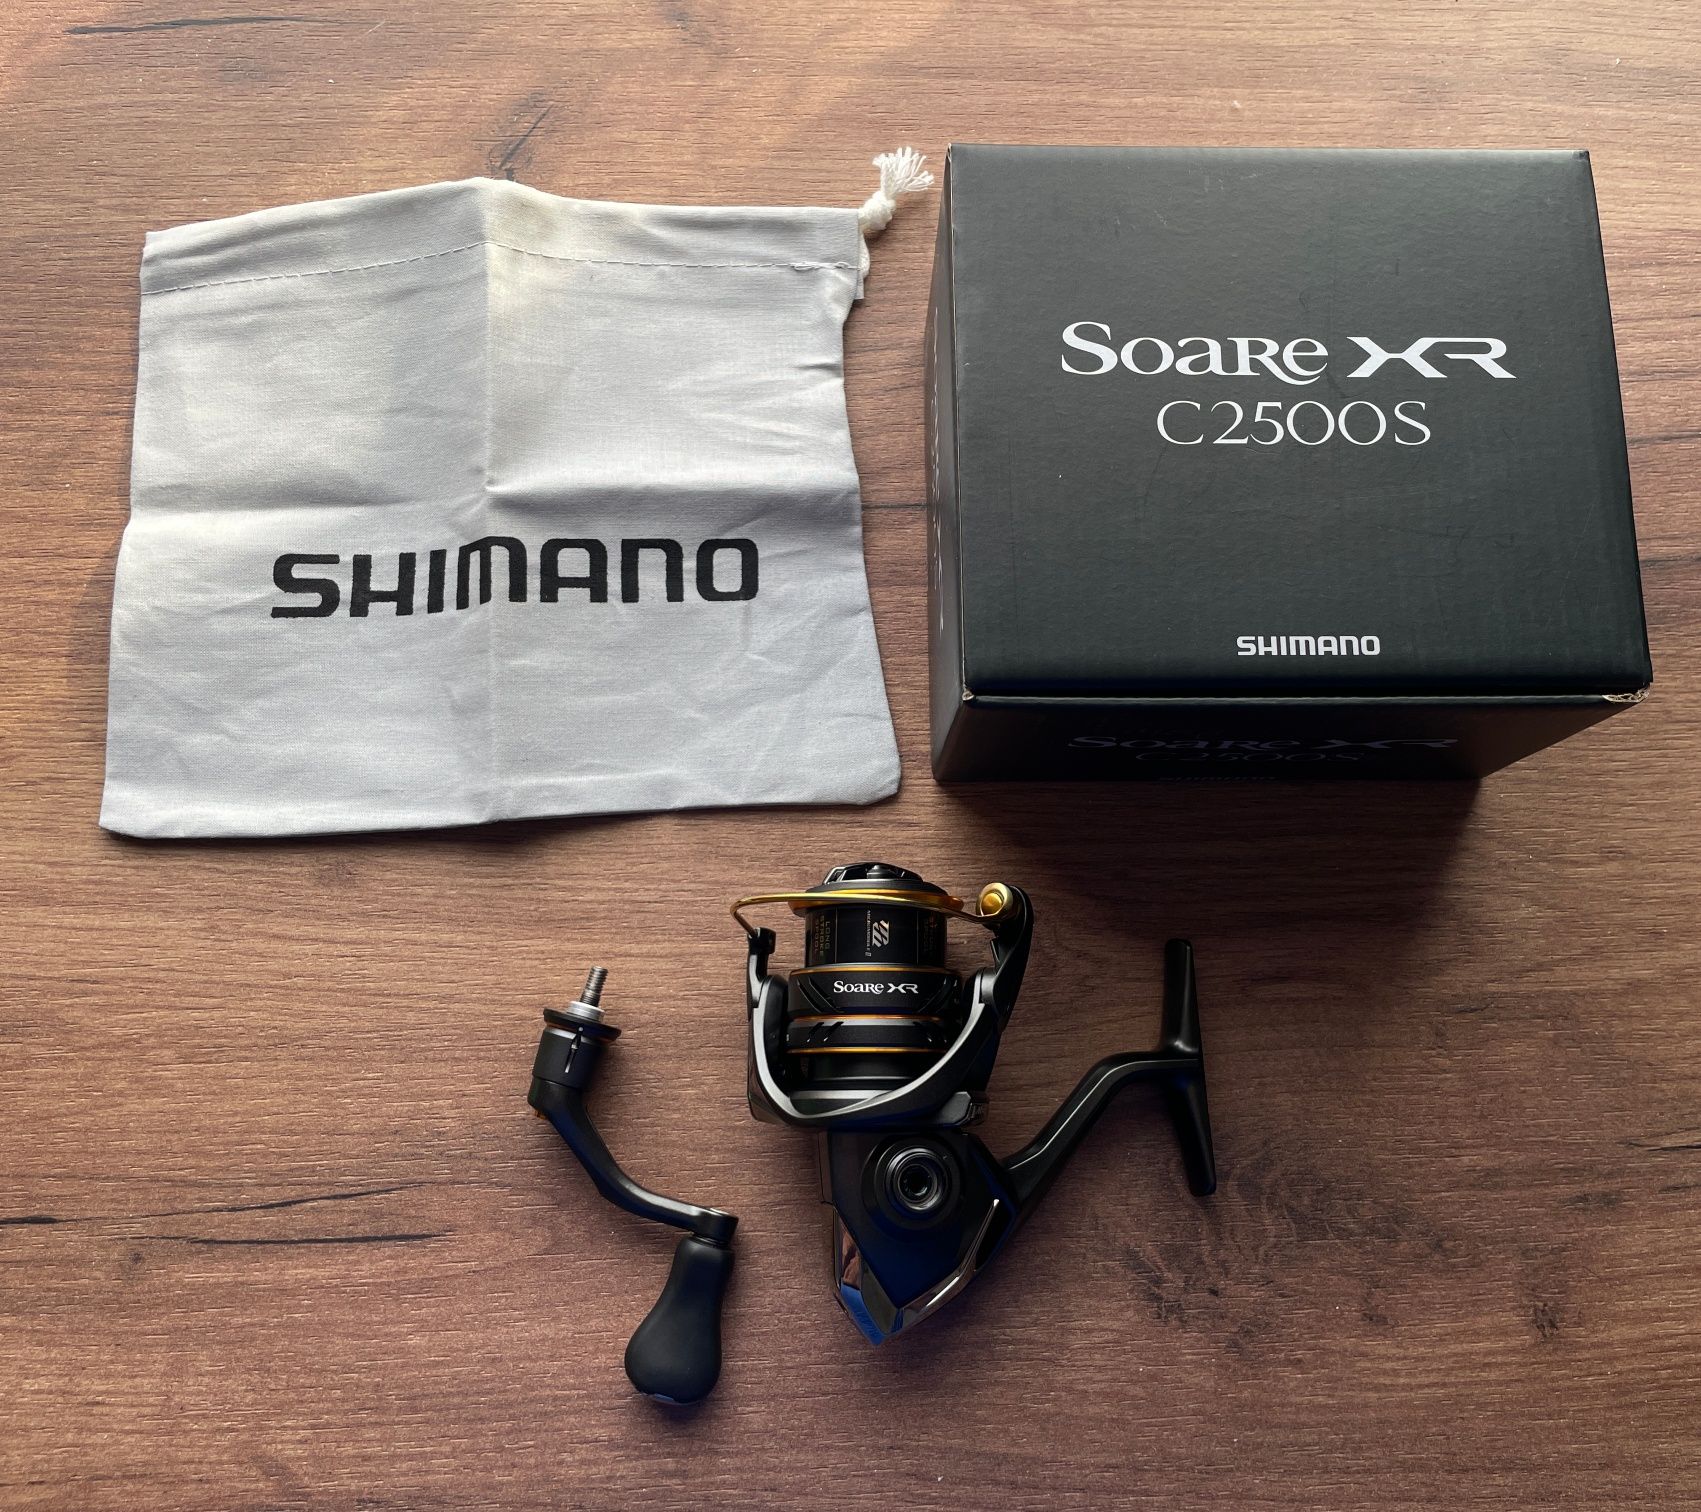 Shimano Soare XR C2500S .Нова. Японія